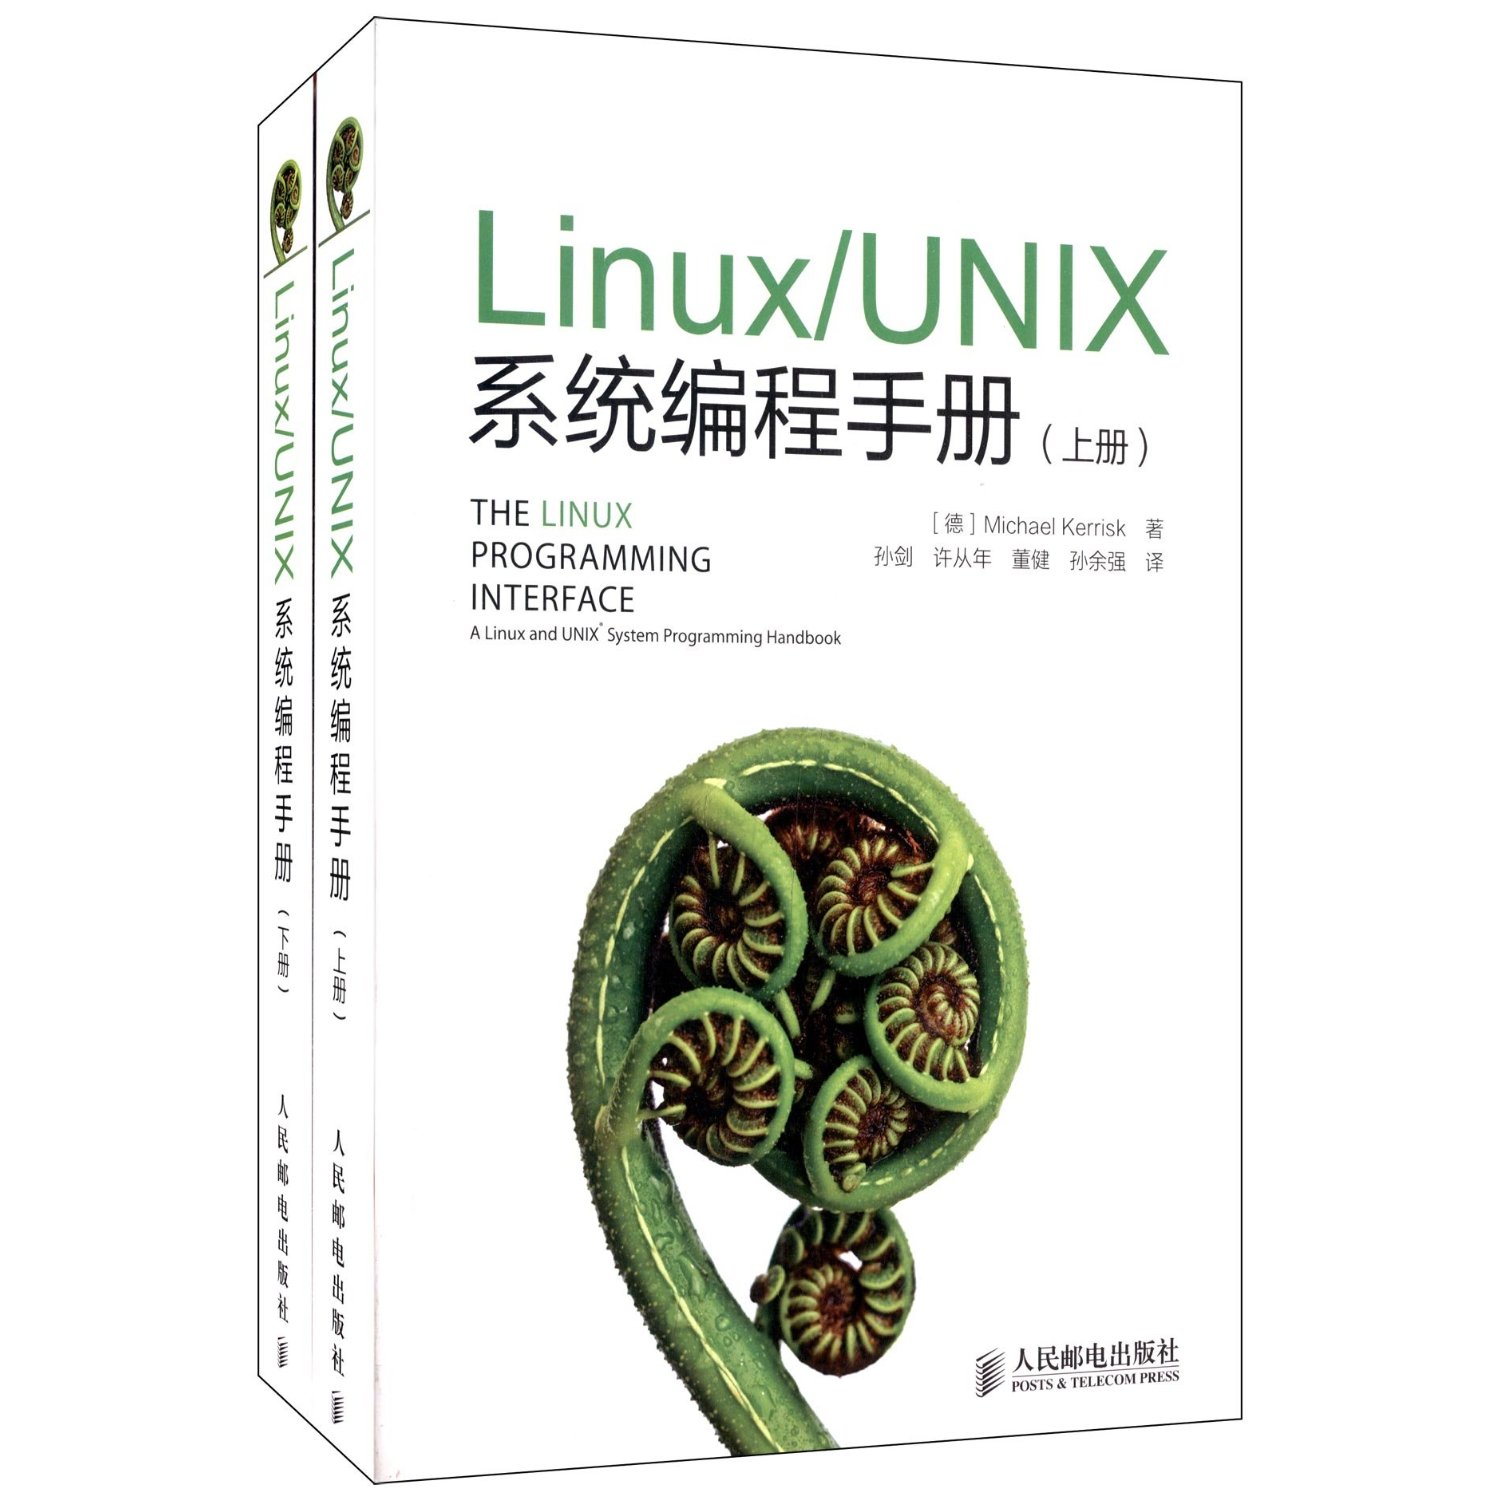 Linux/UNIX系統編程手冊